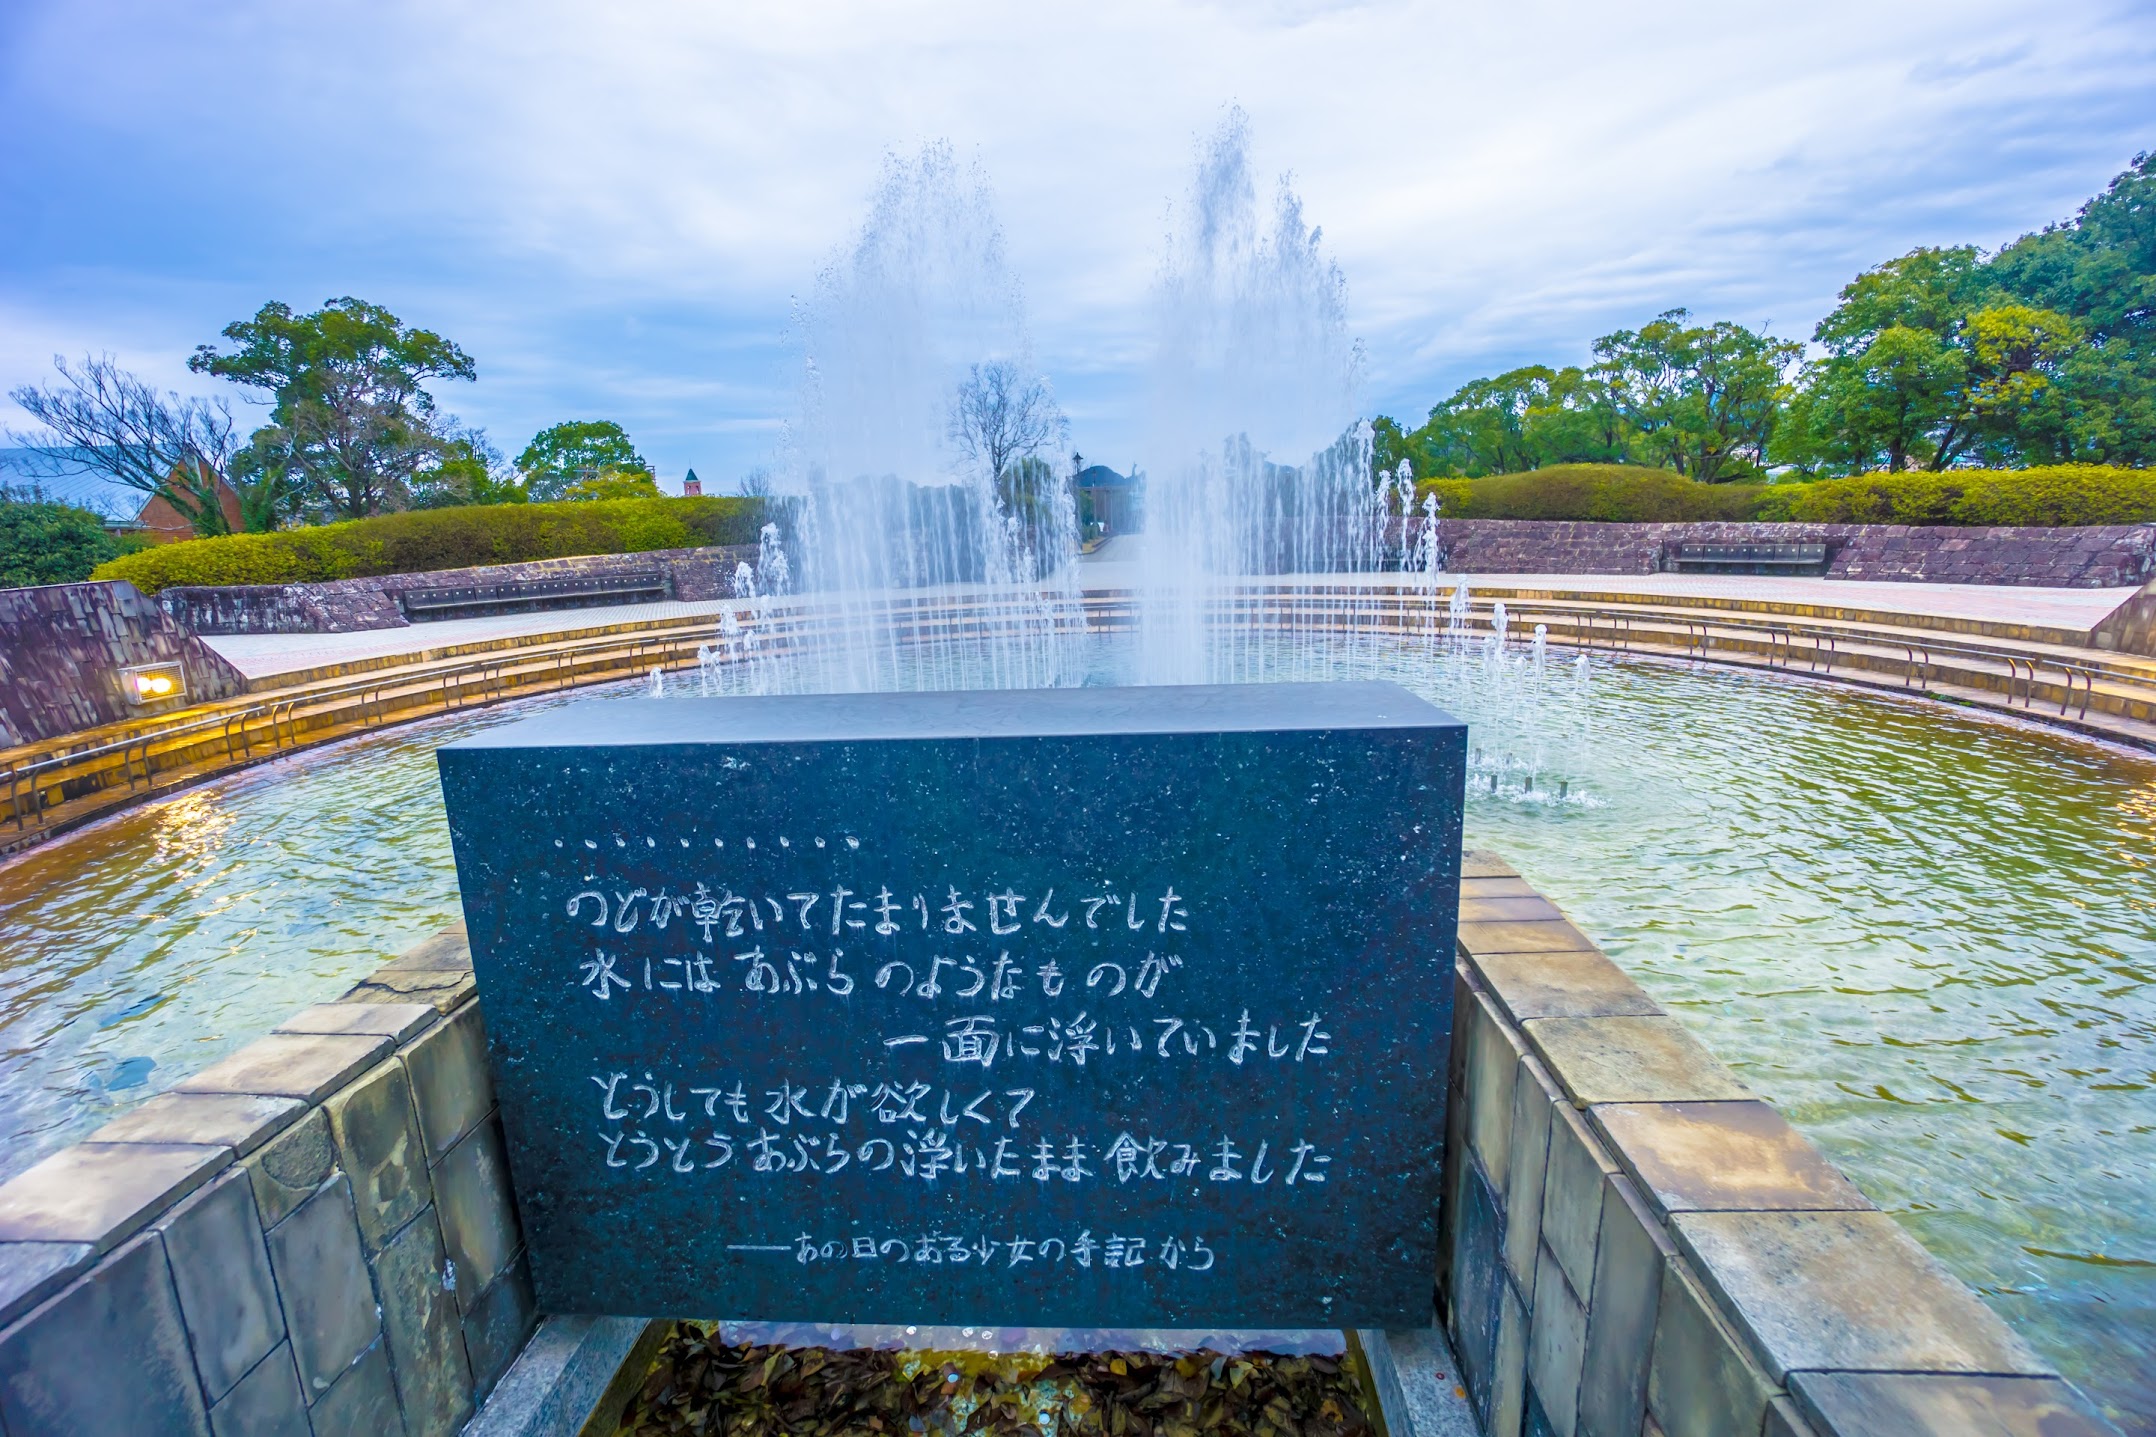 Nagasaki Peace Park Fountain of Peace